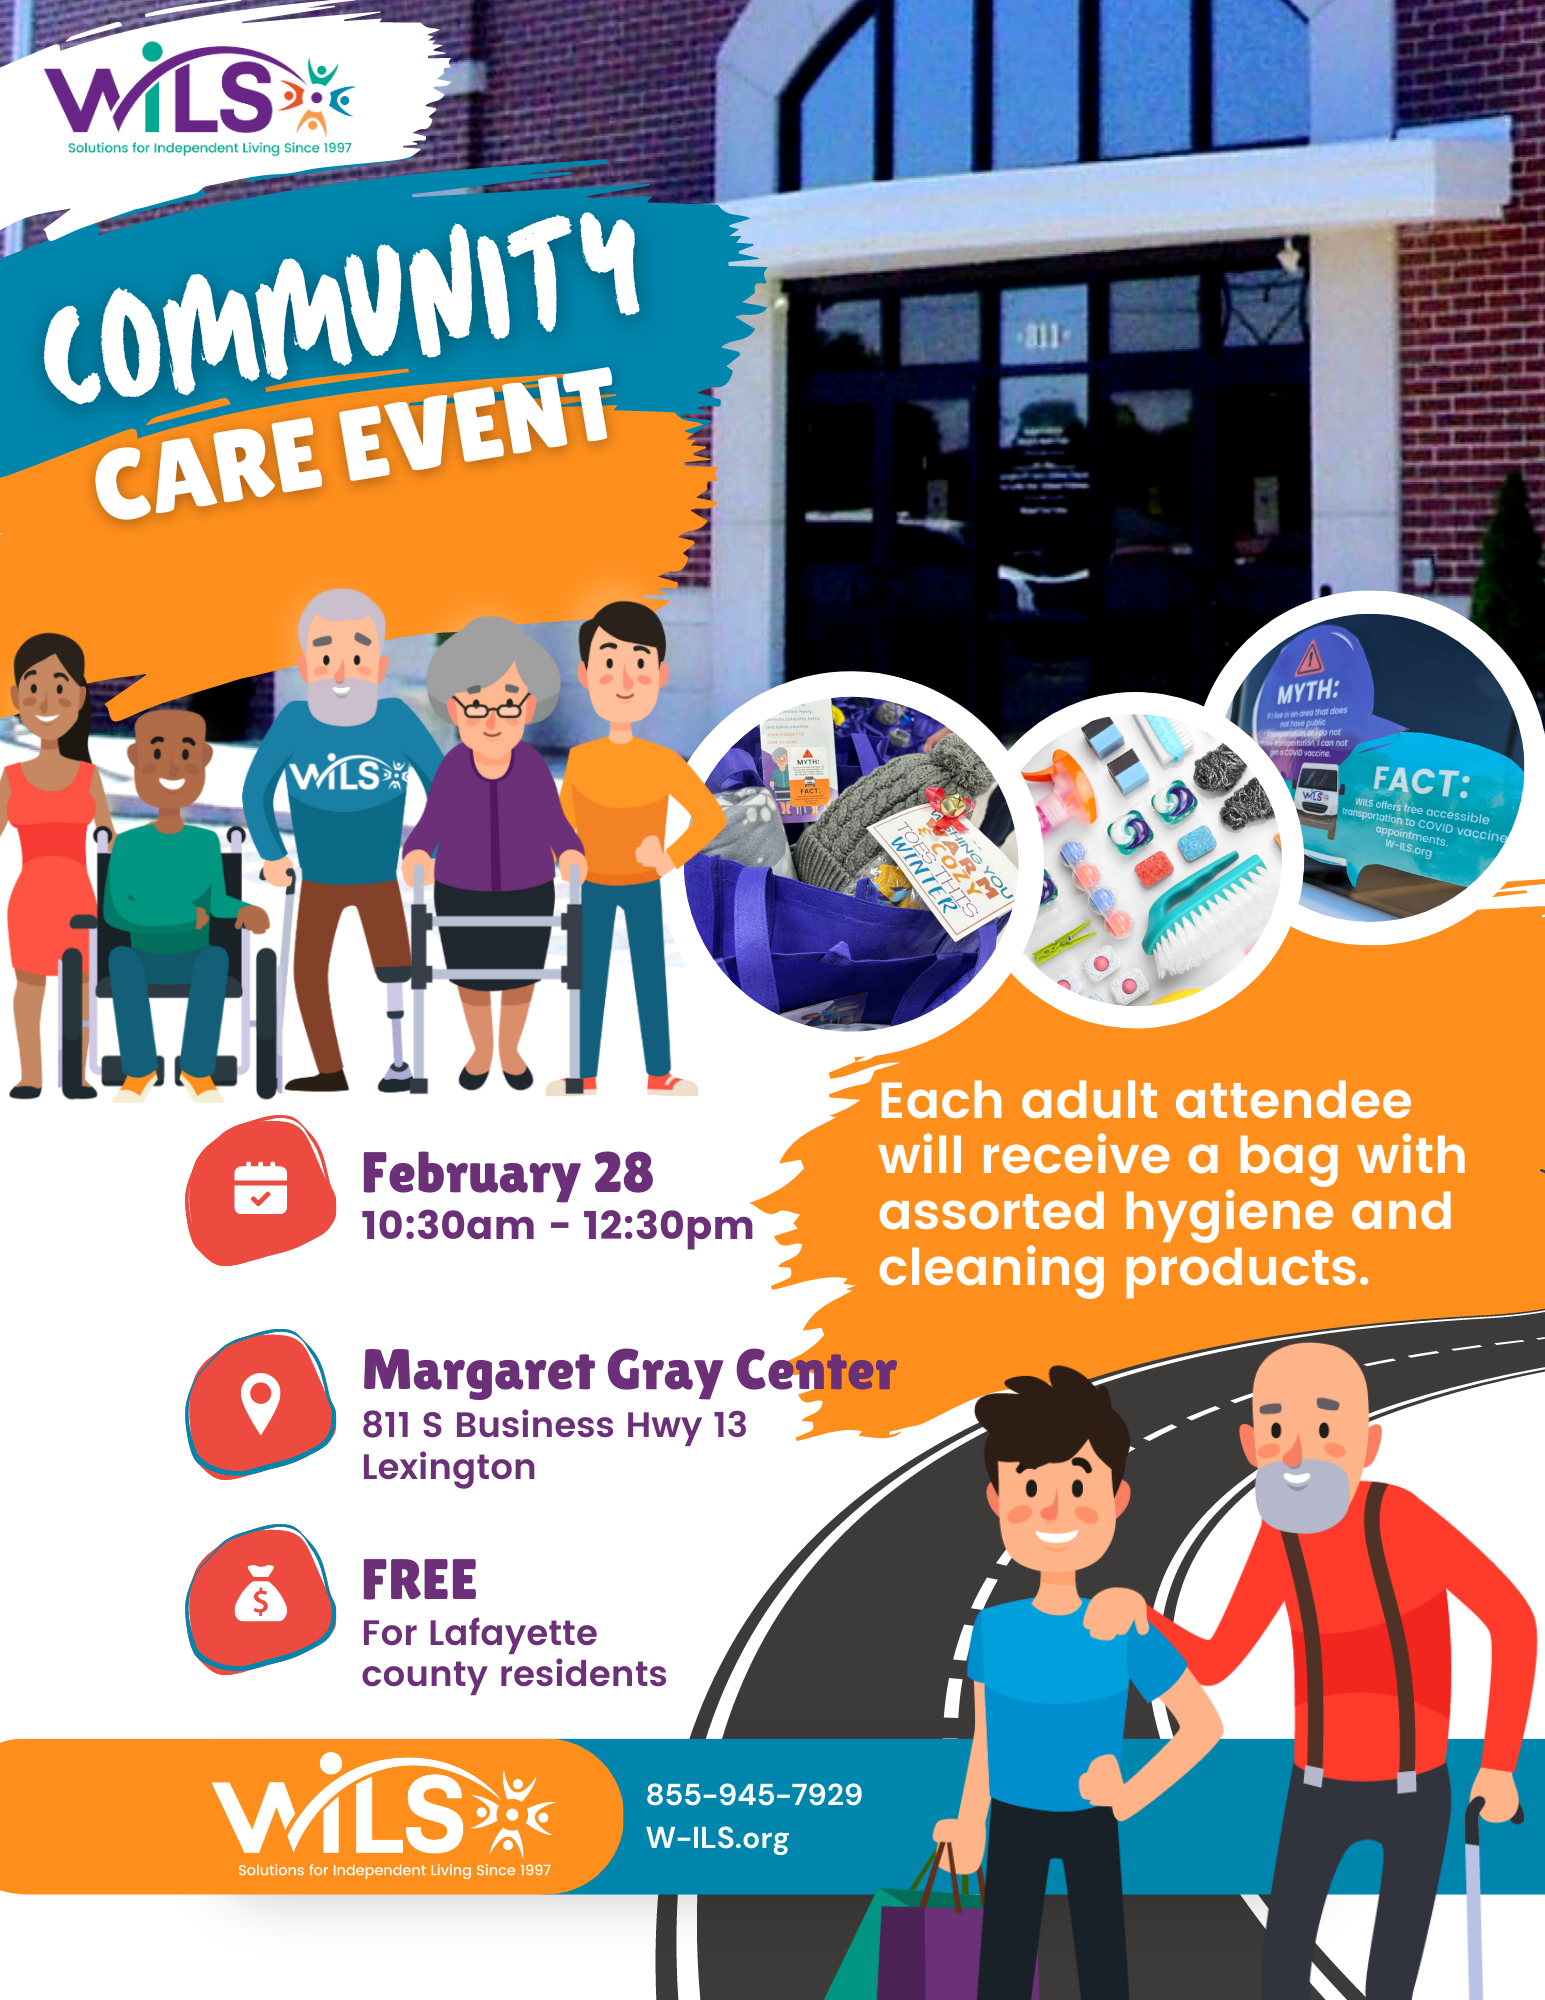 Community Care - Lafayette county @ Margaret Gray Center